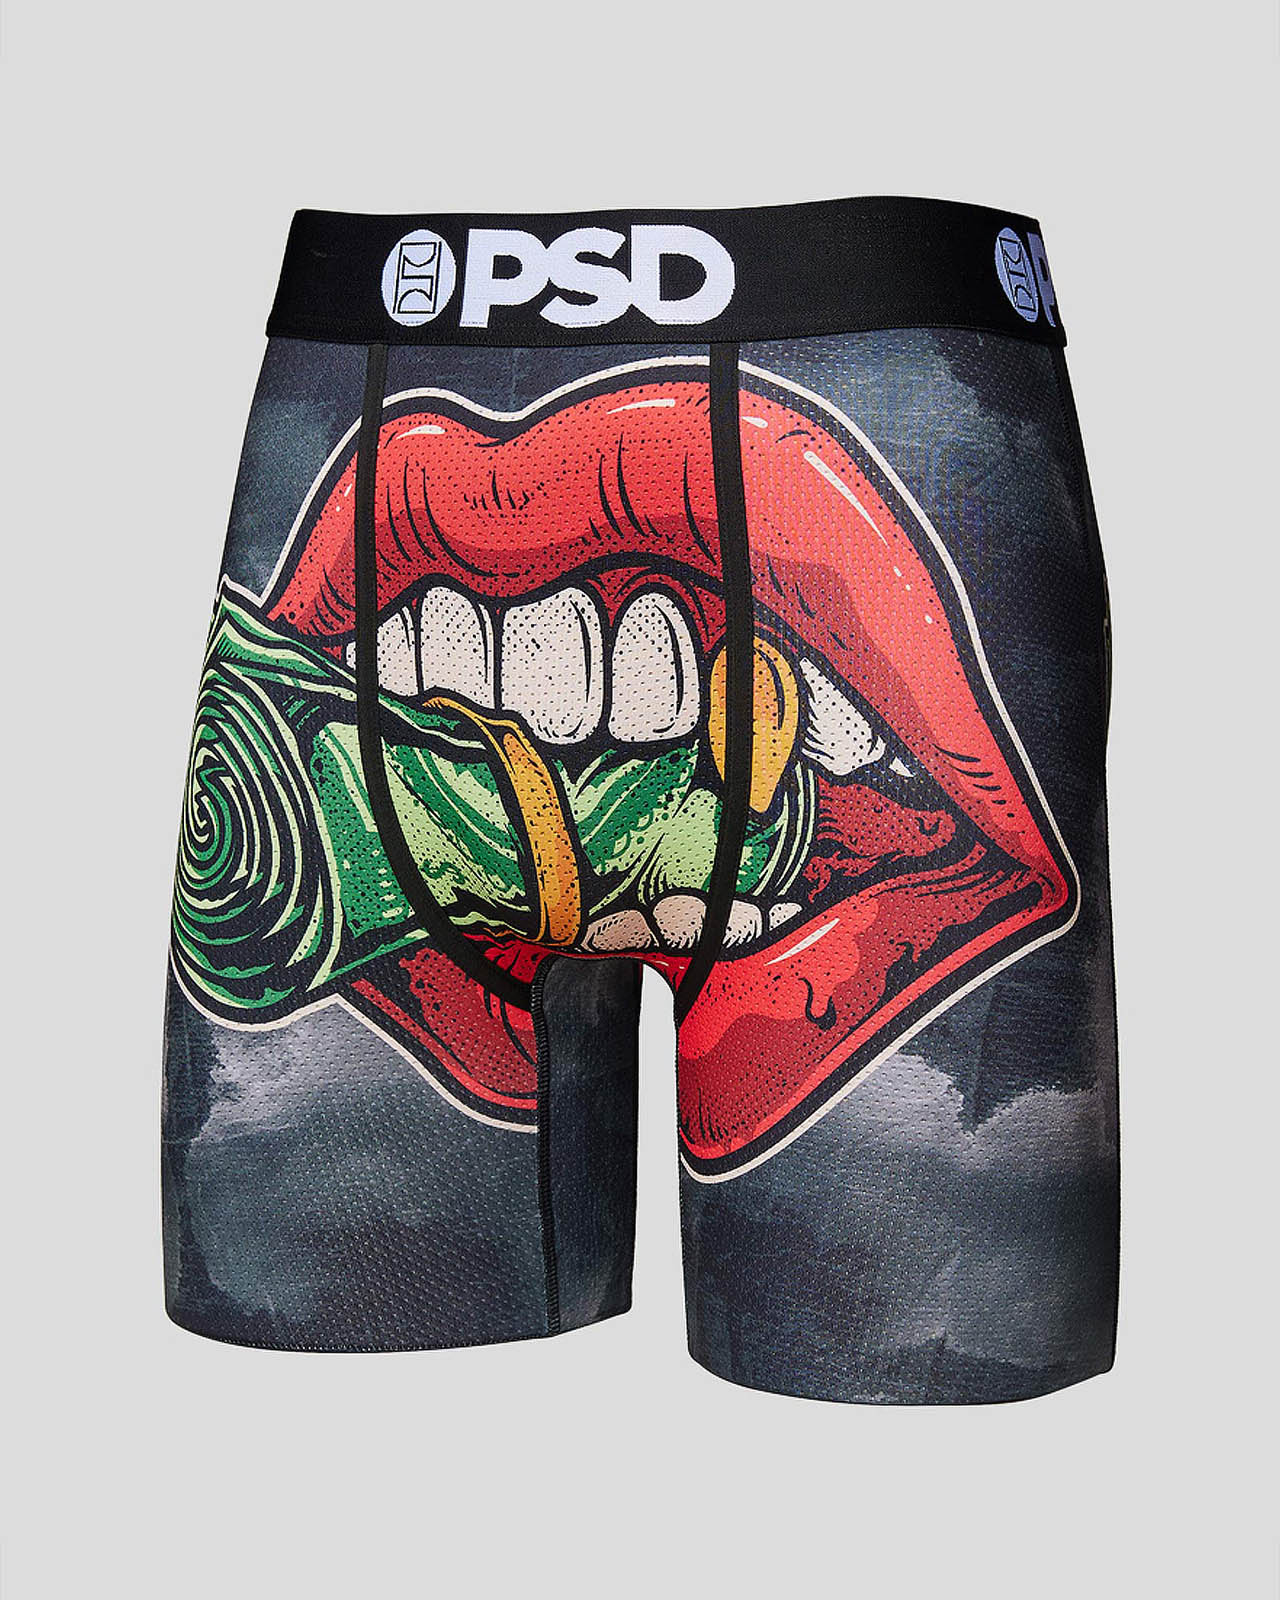 PSD - Blunt Money Boxer